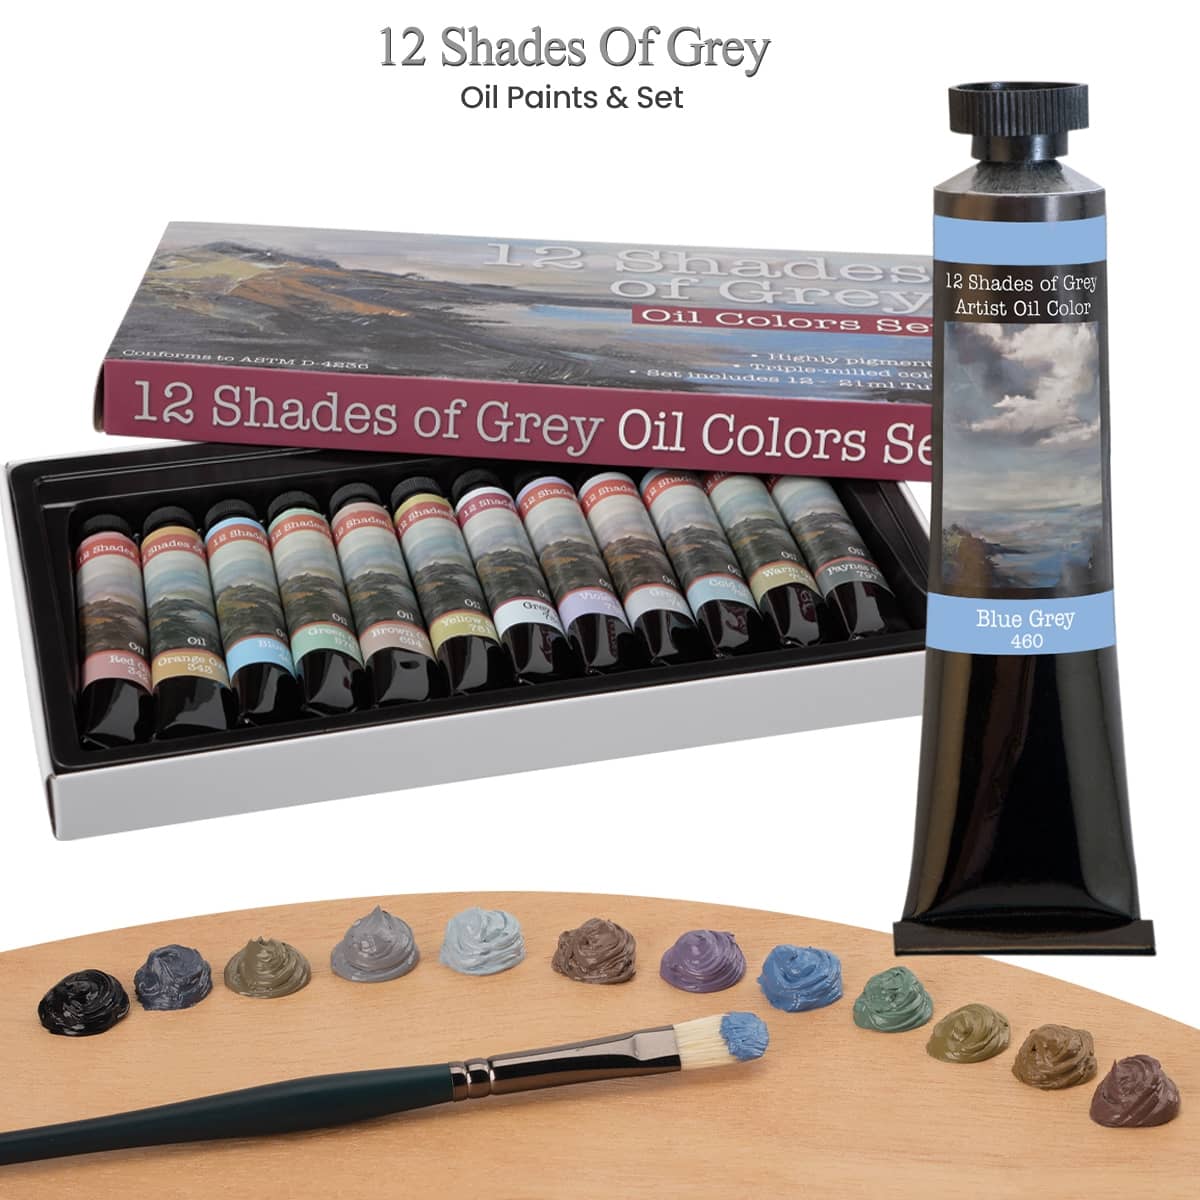 12 Shades of Grey Oils